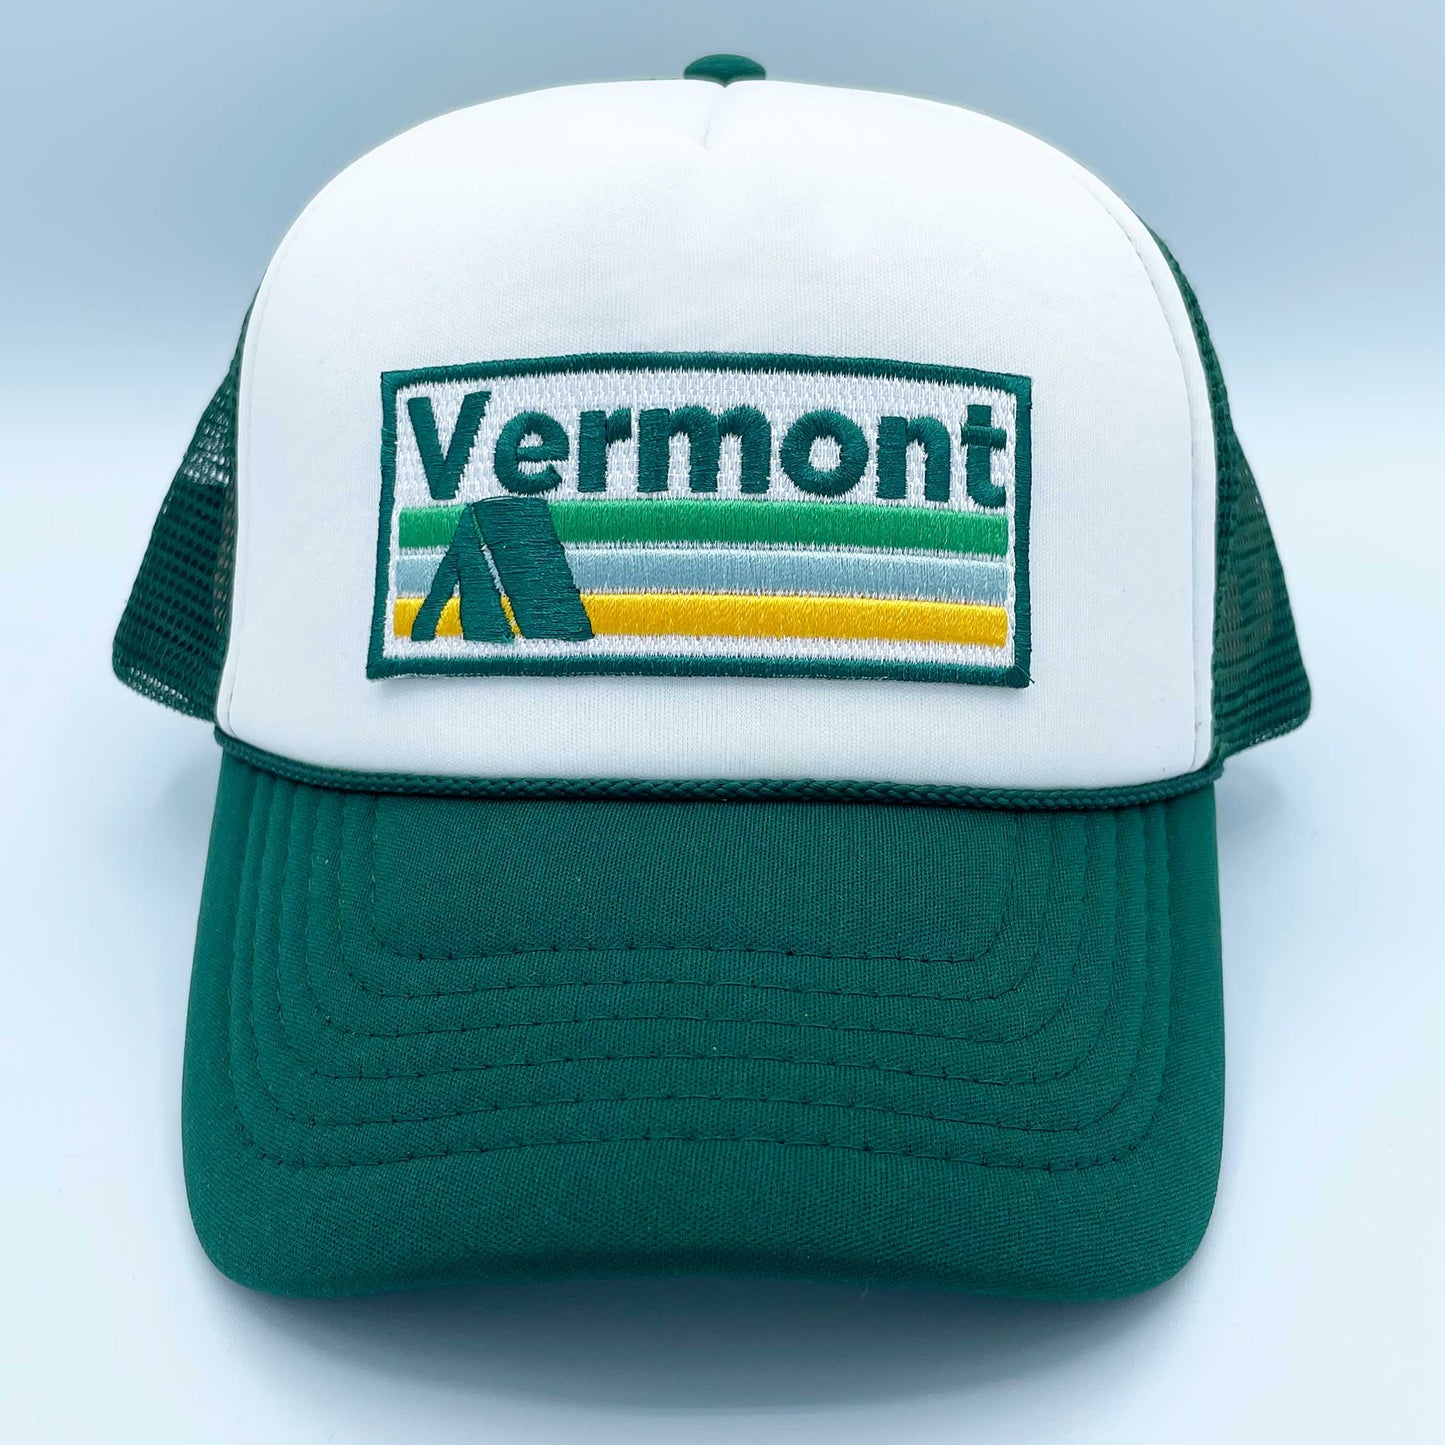 Hey Mountains - Vermont Hat Adult - Retro Camping Vermont Trucker Hat